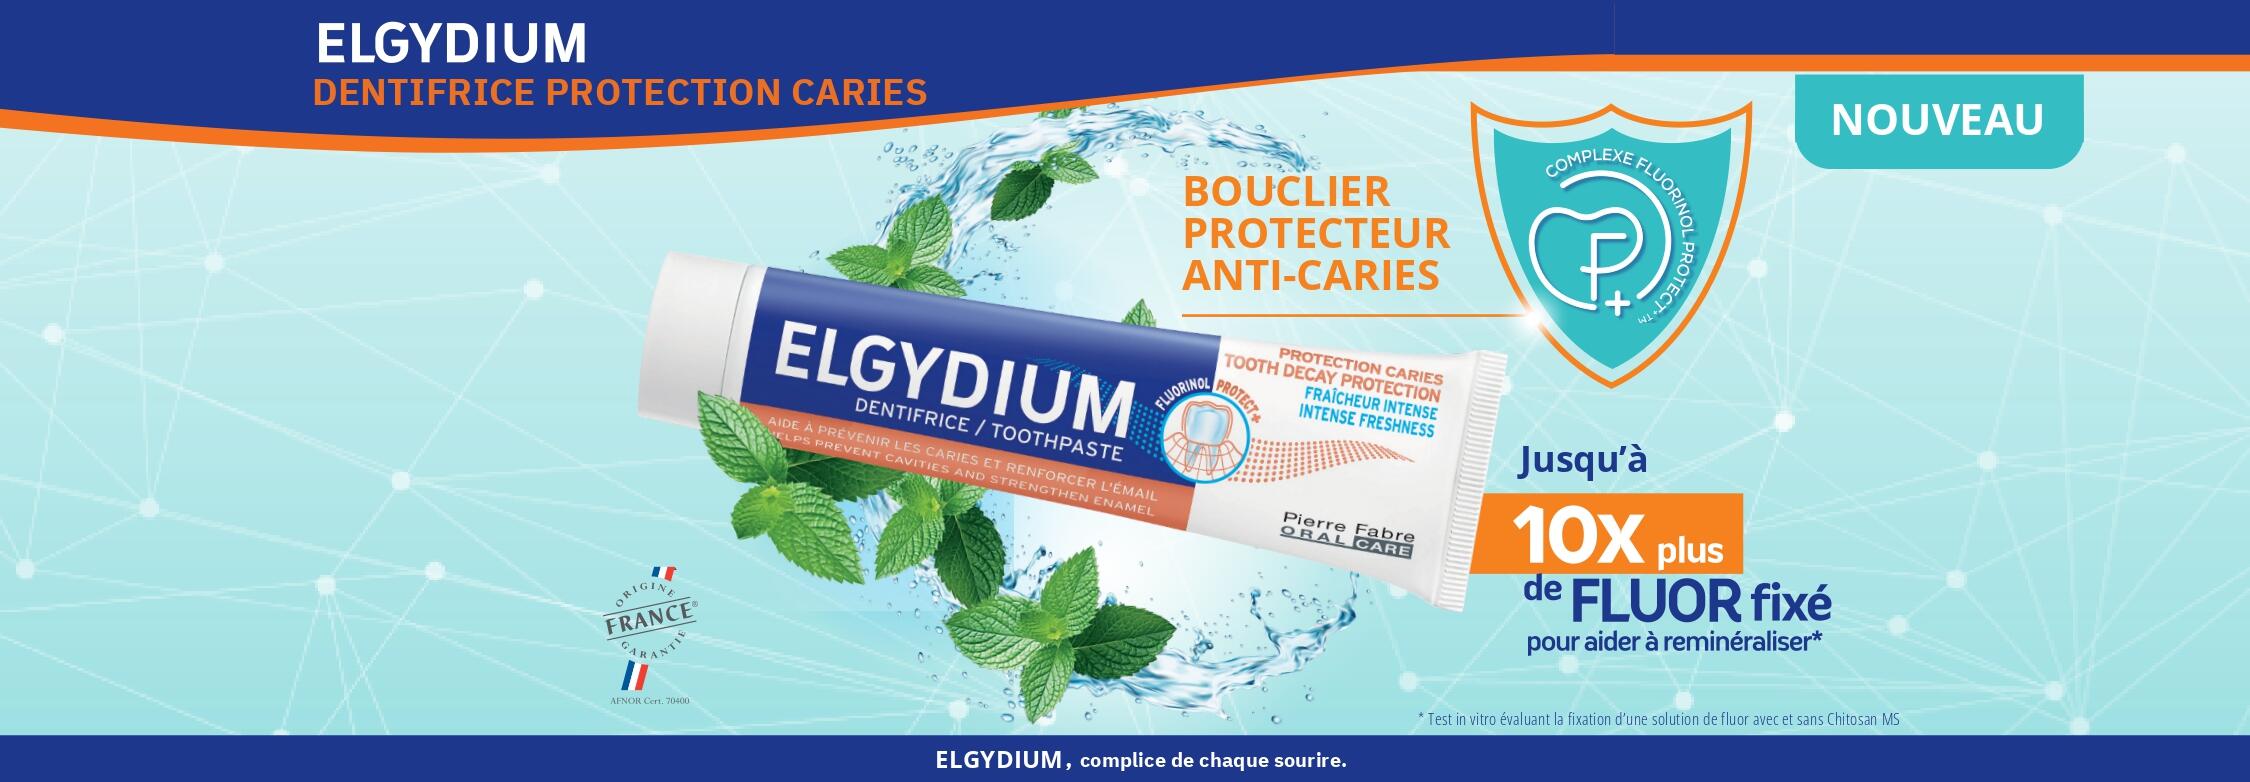 Bannière Elgydium ordi protection caries 1440 X 500 -1- -1-_page-0001